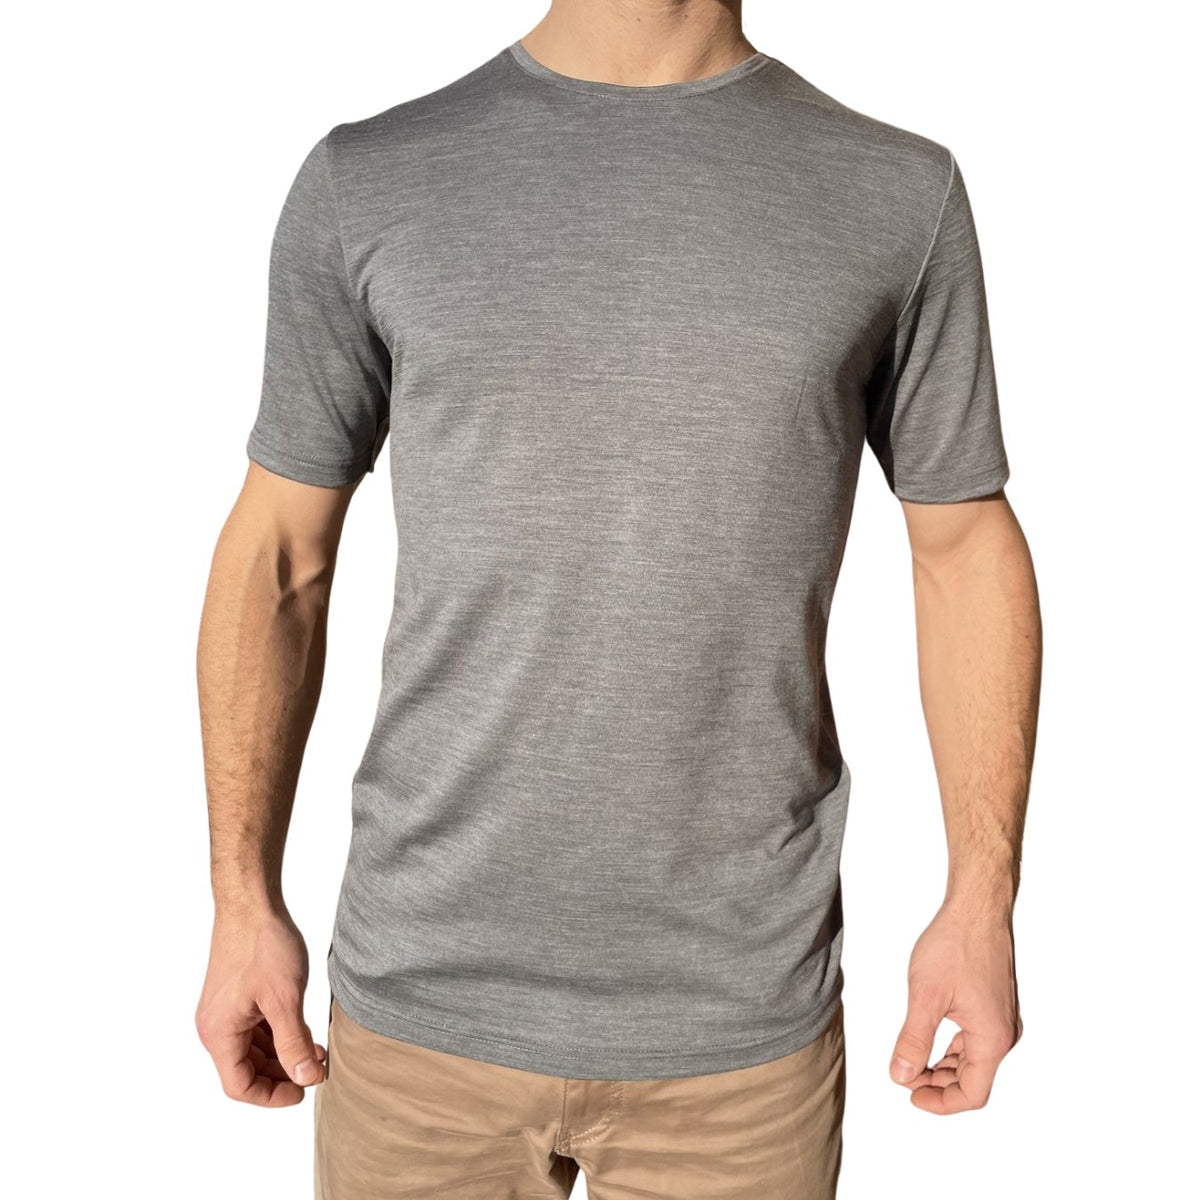 T-Shirt Herren fels grau, Merinowolle & Seide (bio/GOTS) - Glückskind - T-Shirt - fels